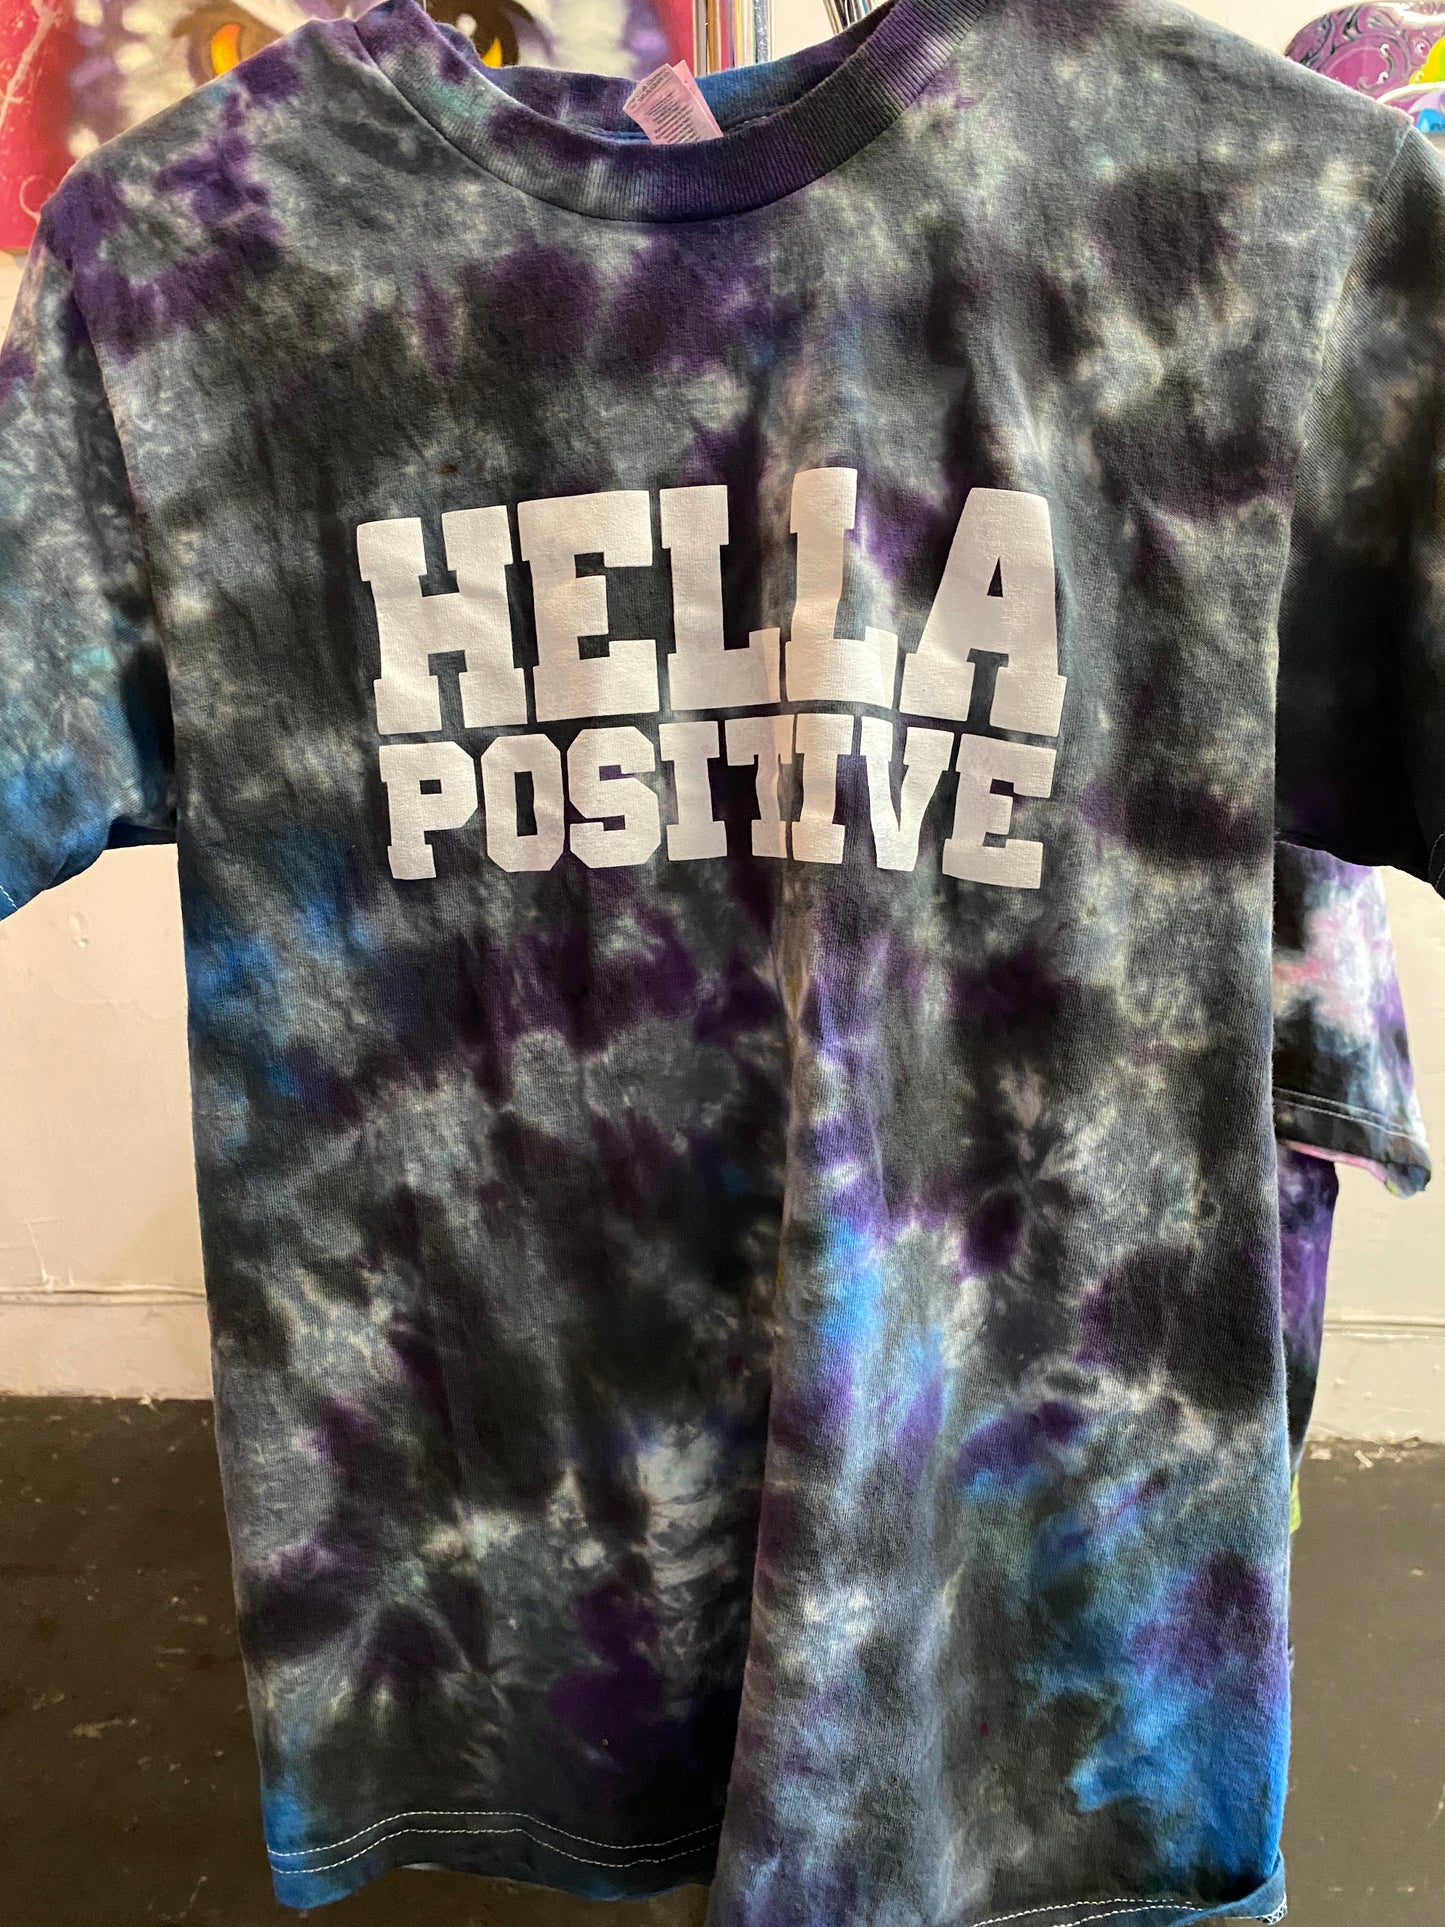 Hella Positive Tie Dye T-Shirt - Small